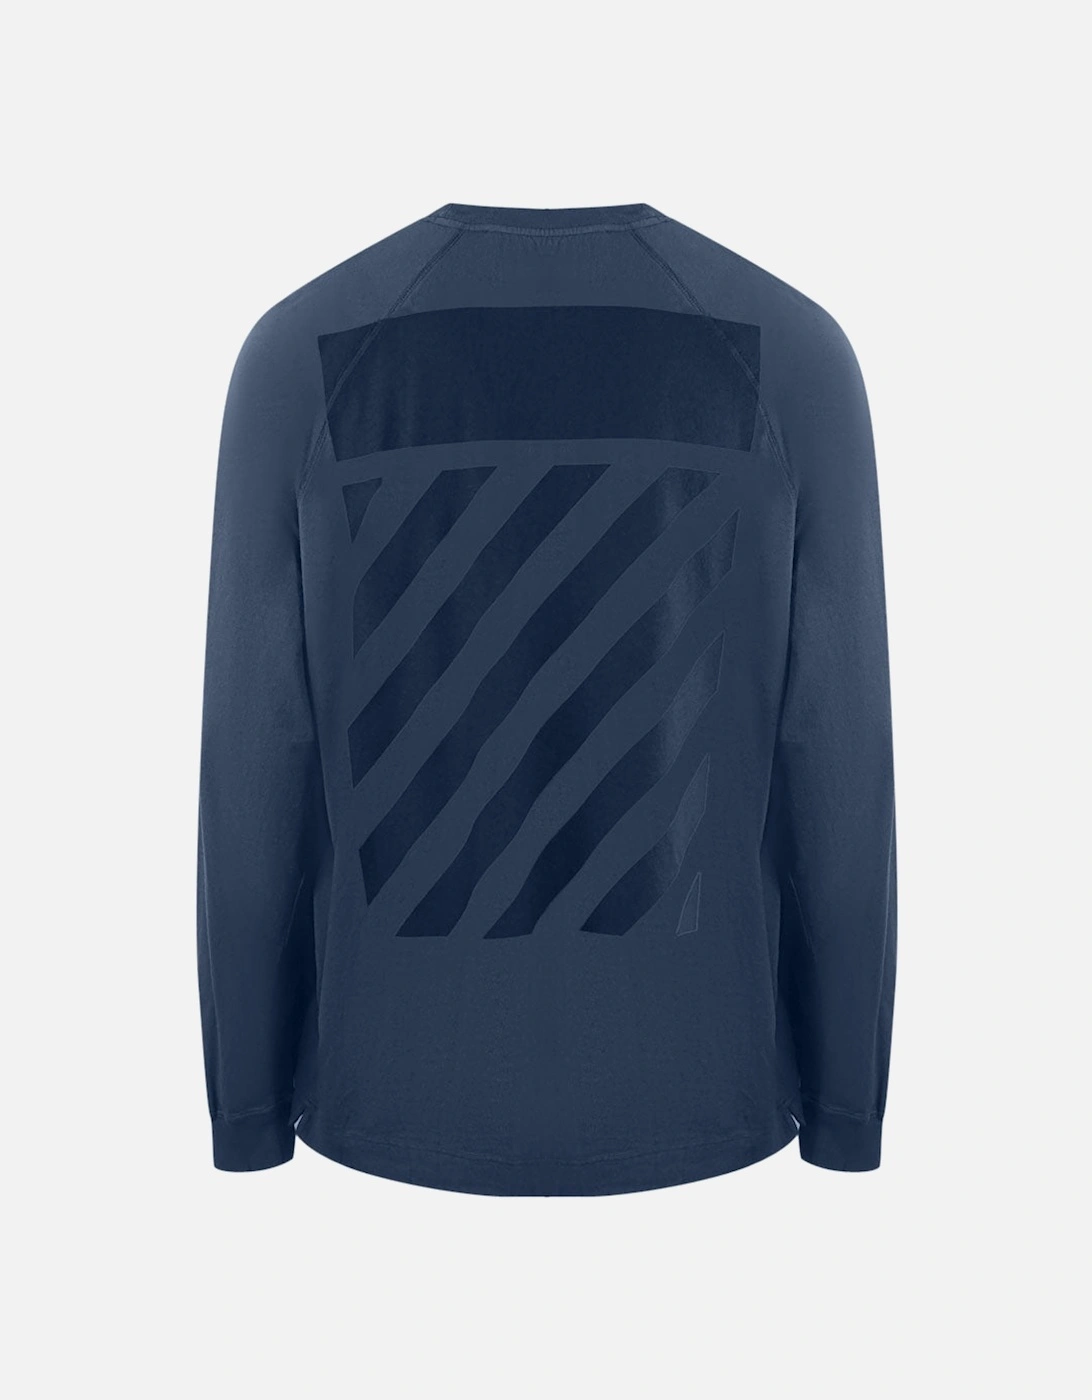 Diag Line Back Logo Navy Blue Sweatshirt